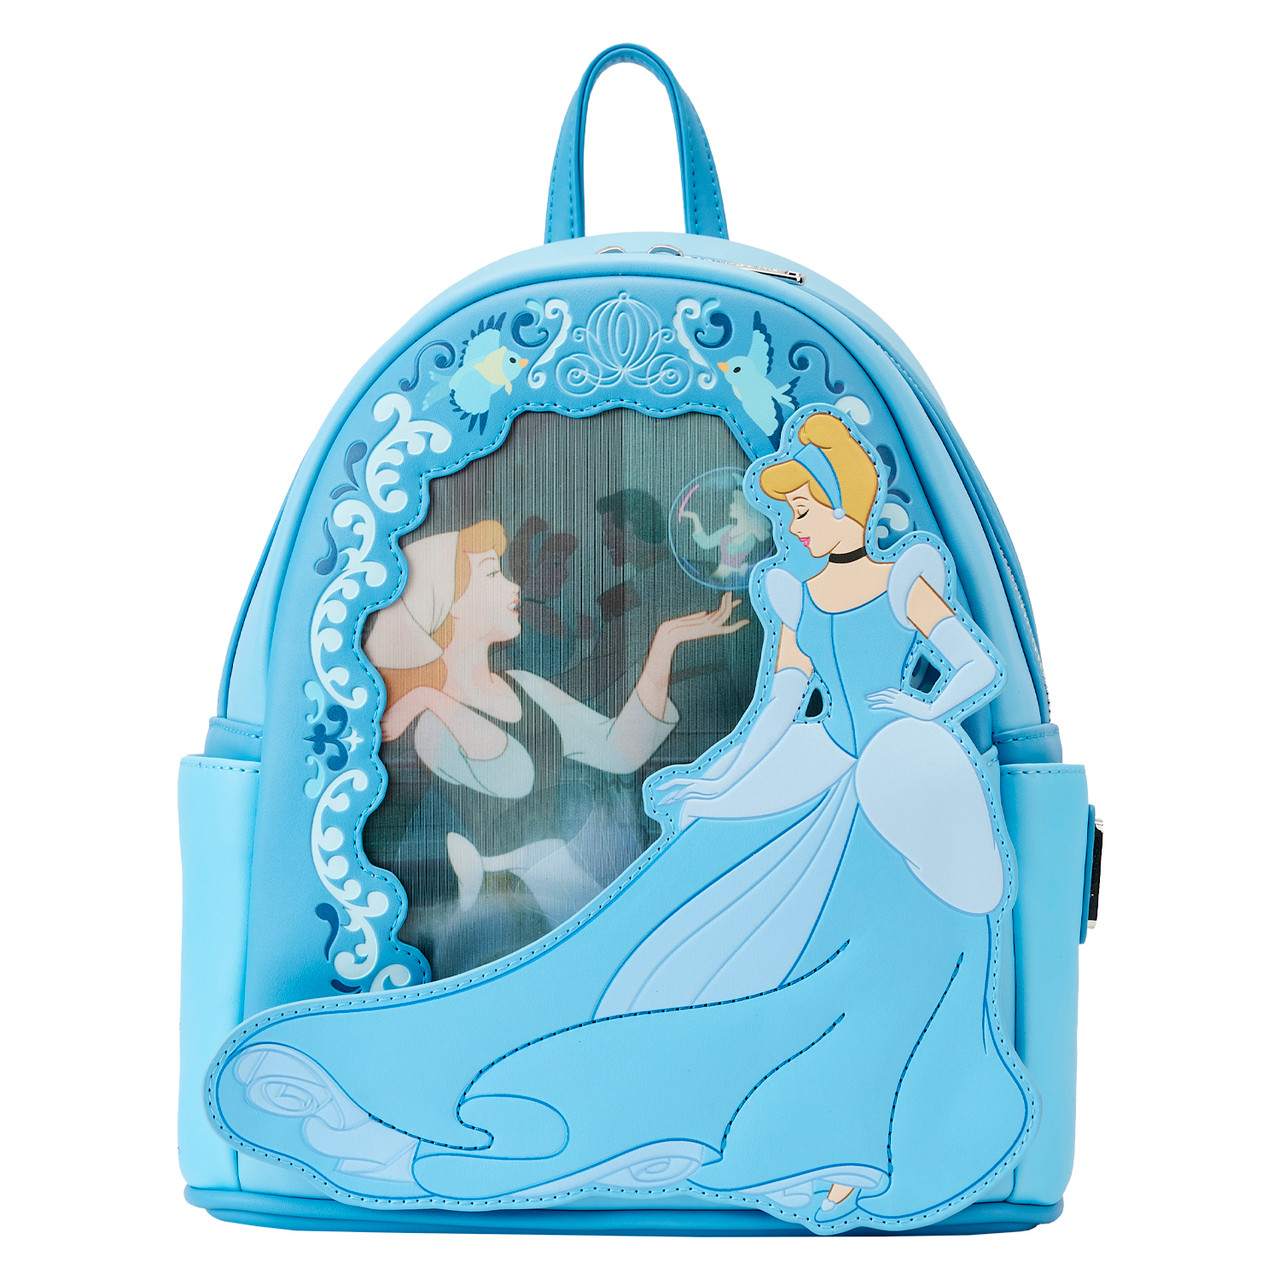 Disney Princess Travel Pack